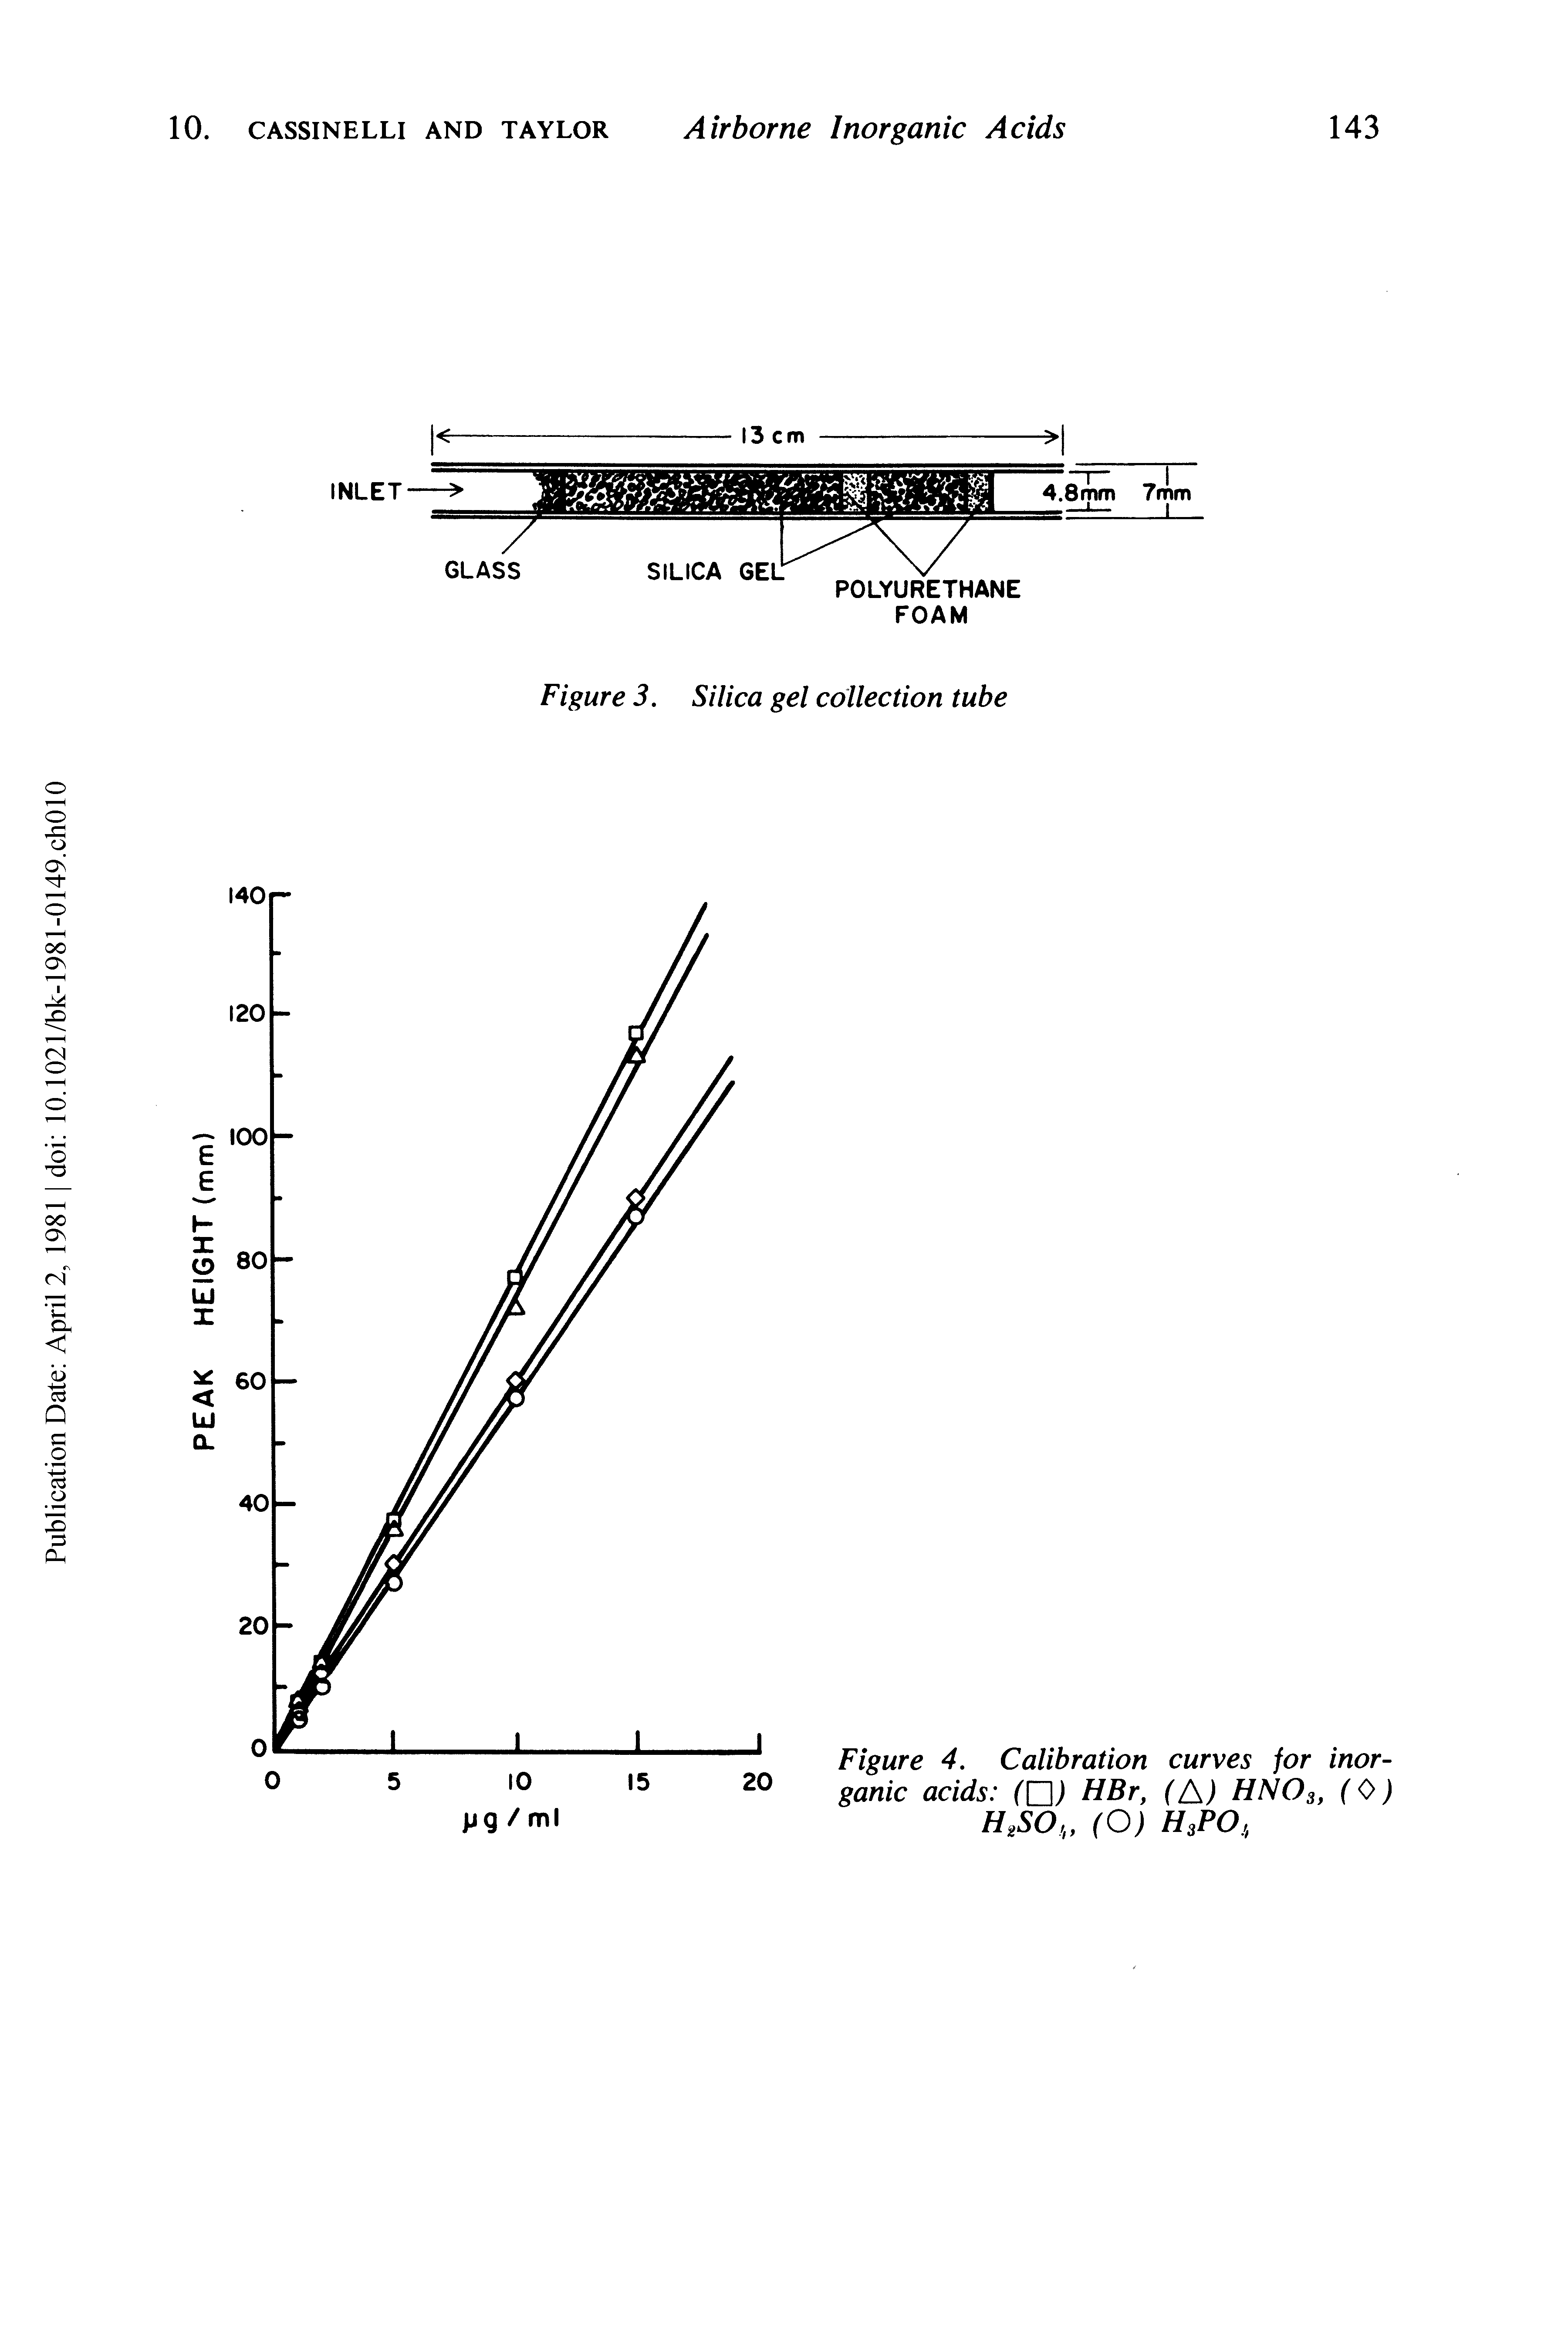 Figure 4. Calibration curves for inorganic acids HBr, (A) HN03, (0)...